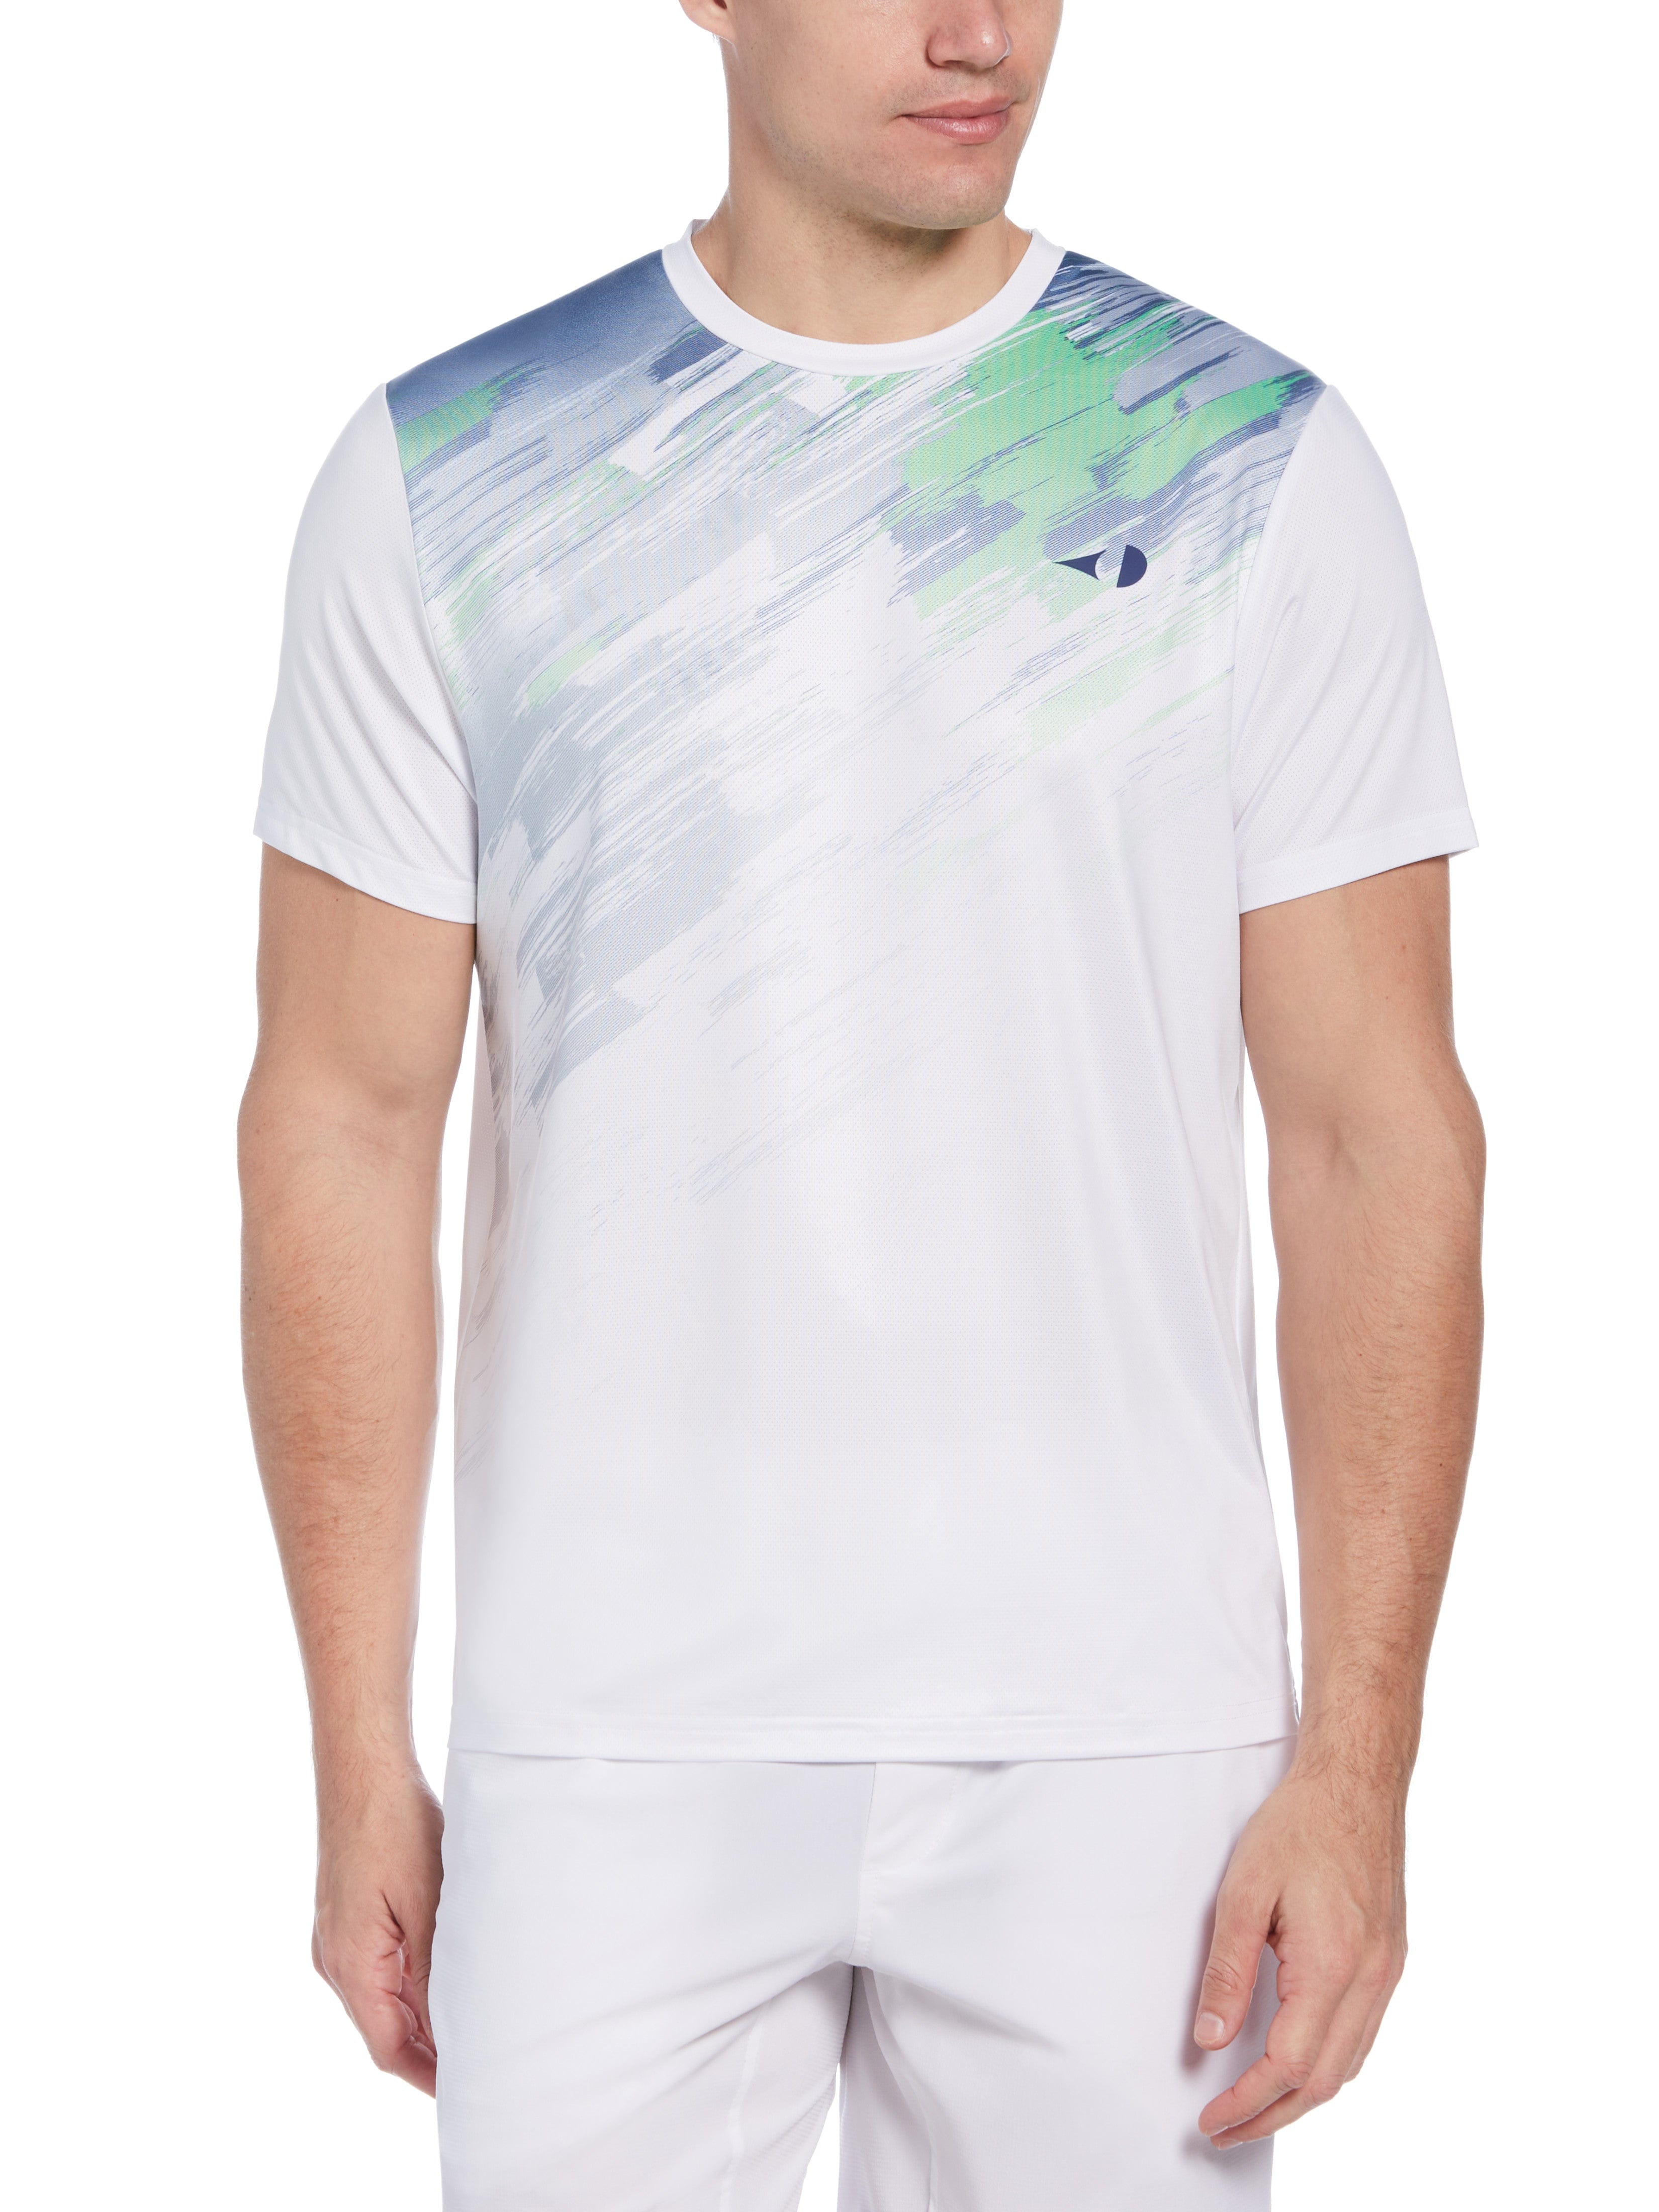 Grand Slam Mens Paint Splatter Printed Tennis T-Shirt, Size 2XL, White, Polyester/Spandex | Golf Apparel Shop